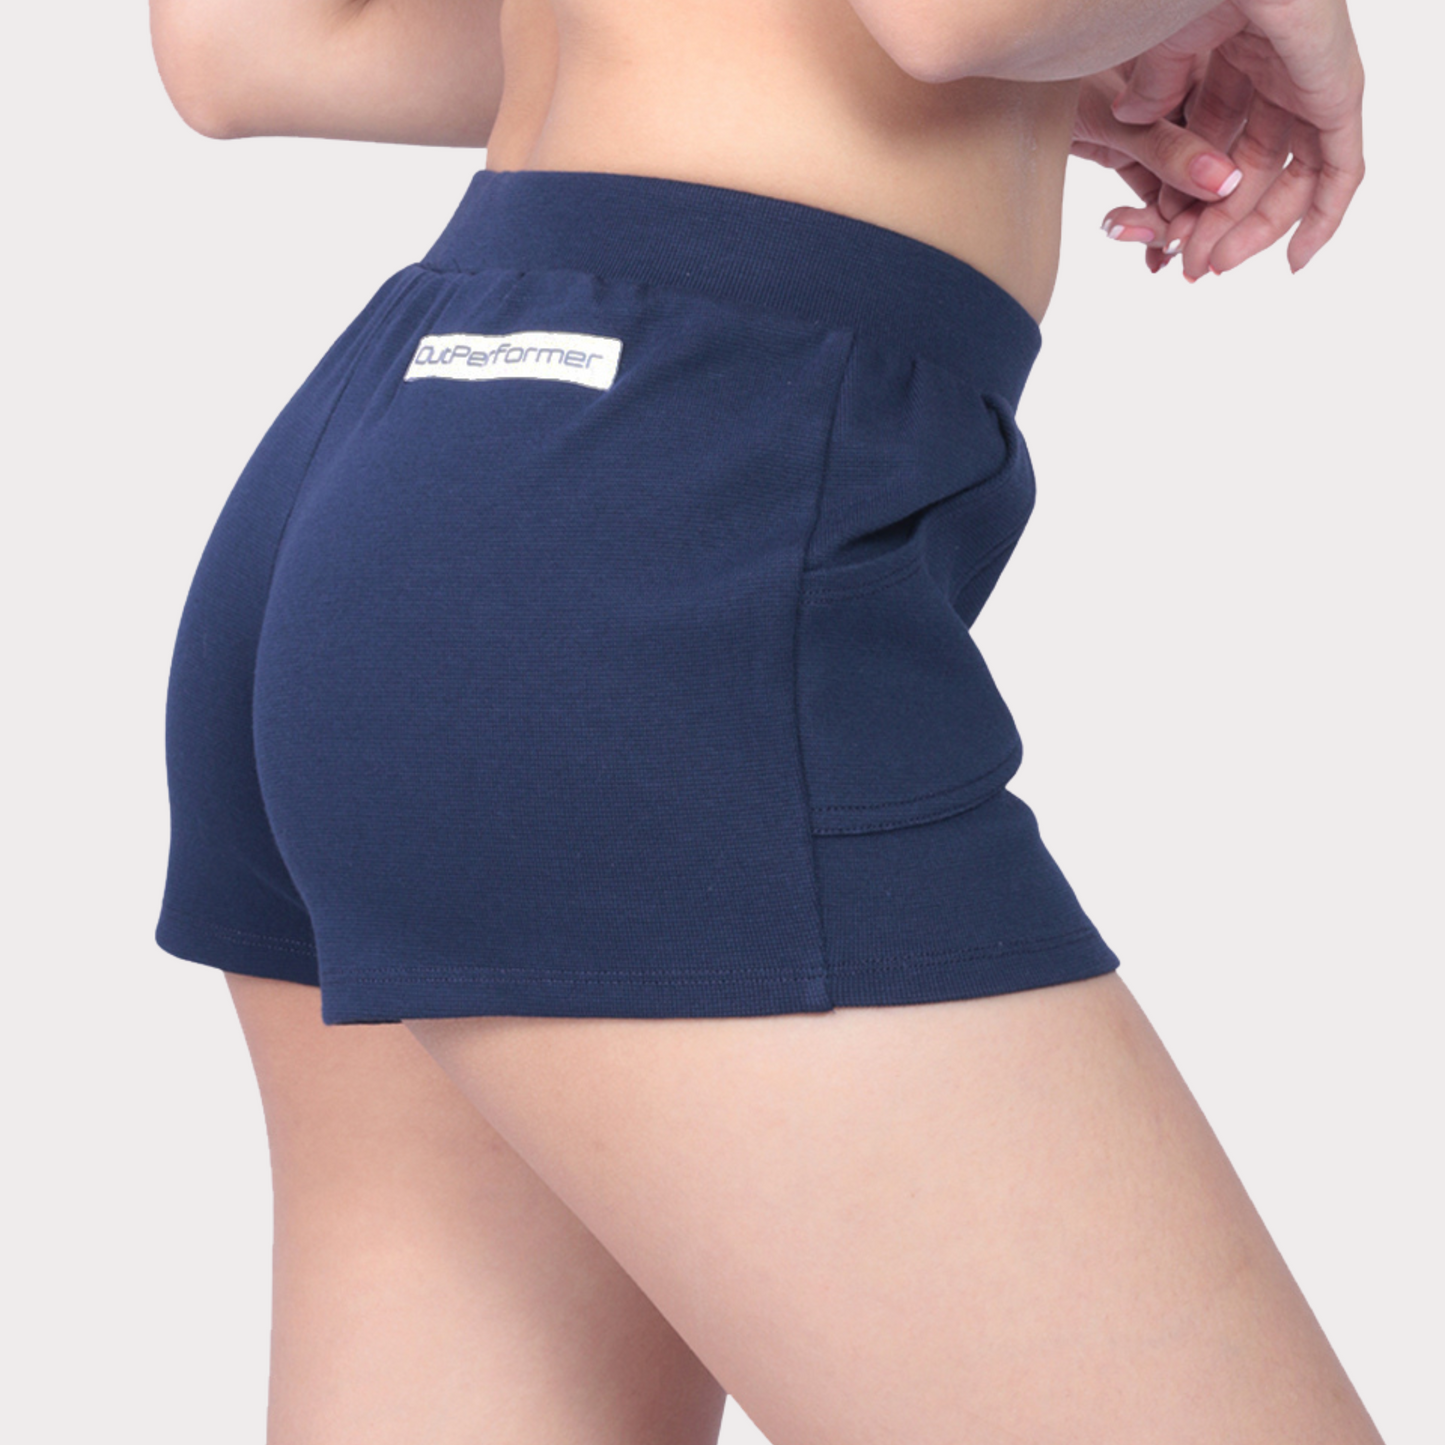 Women's Shorts Activewear / Sportswear - Women's Mini Ribbed Shorts - S / Navy - Outperformer